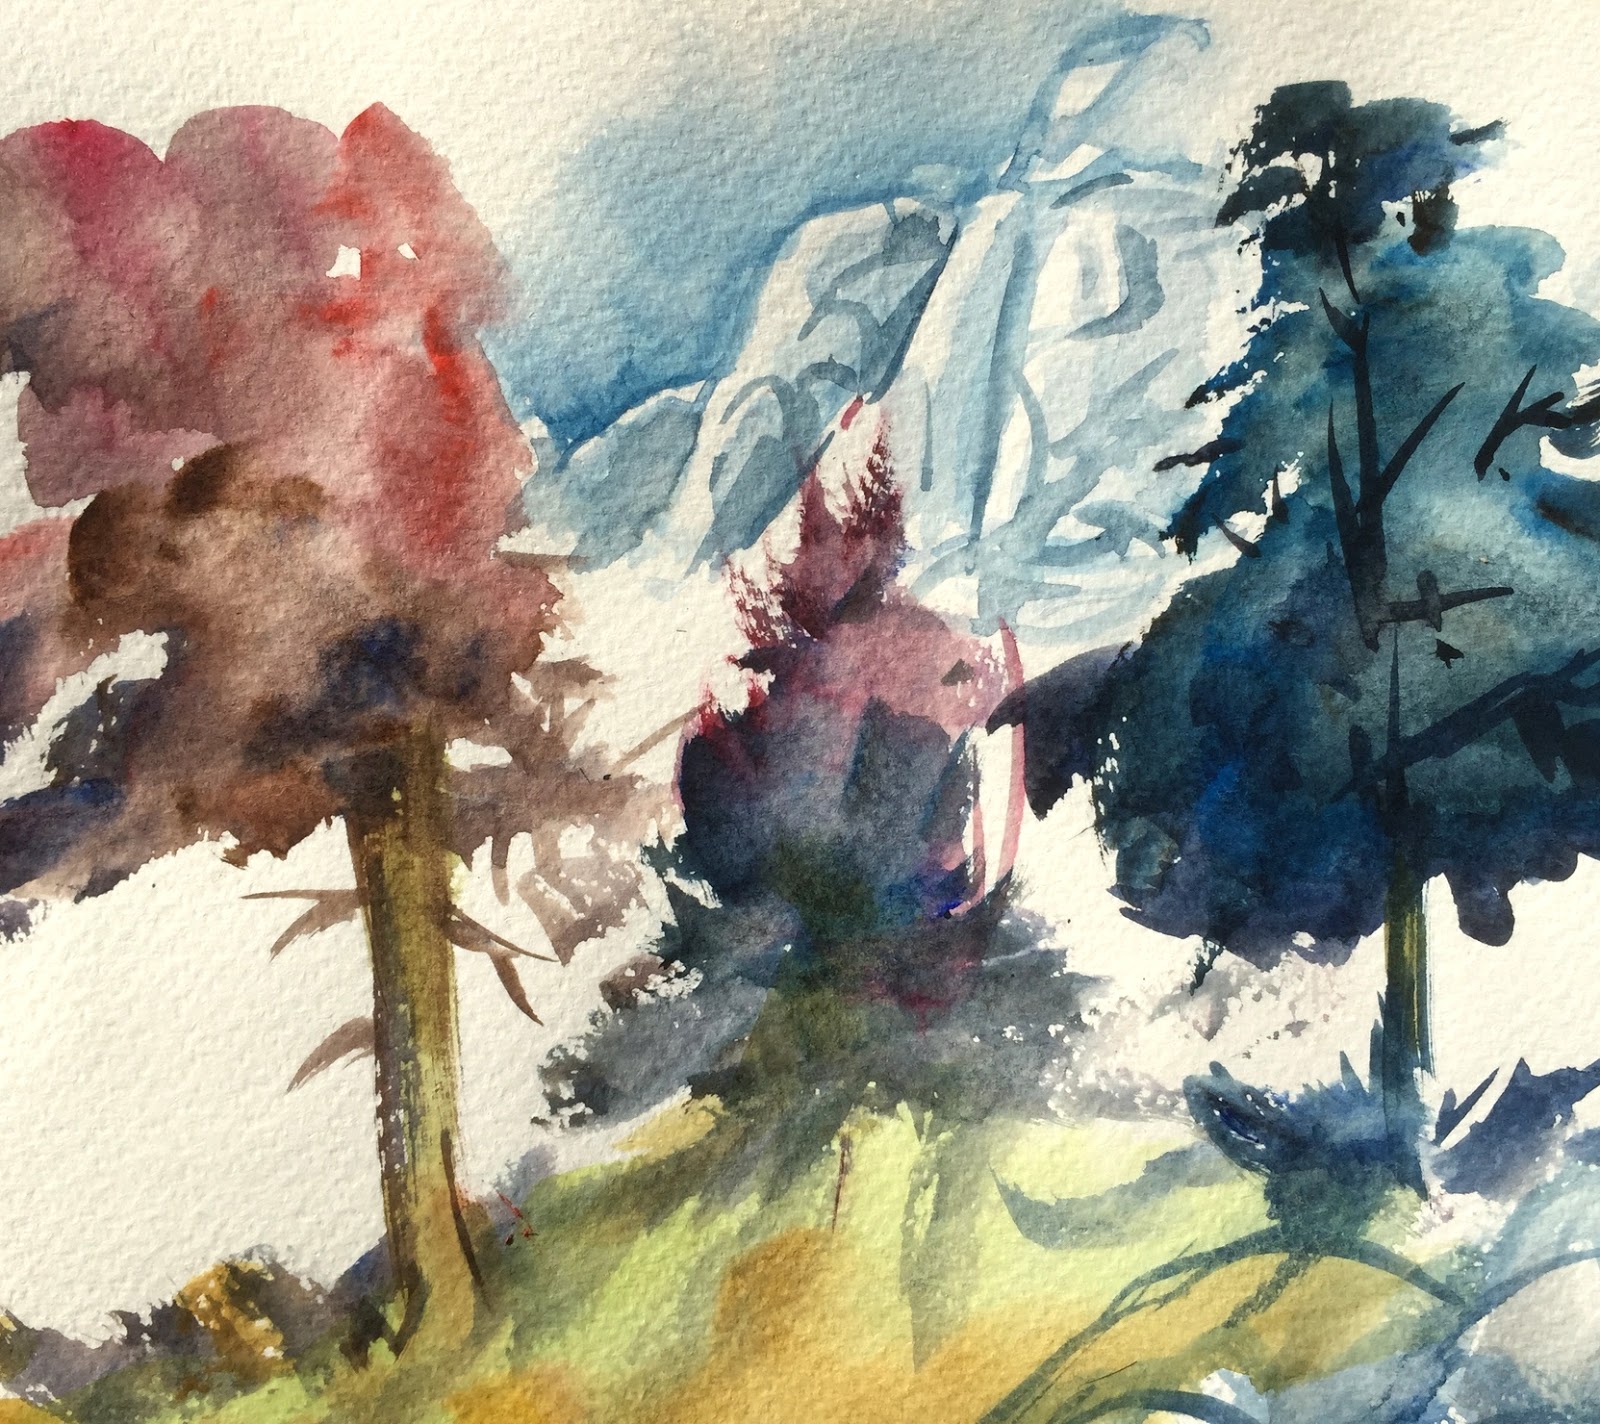 Watercolor landscape study by Artmagenta